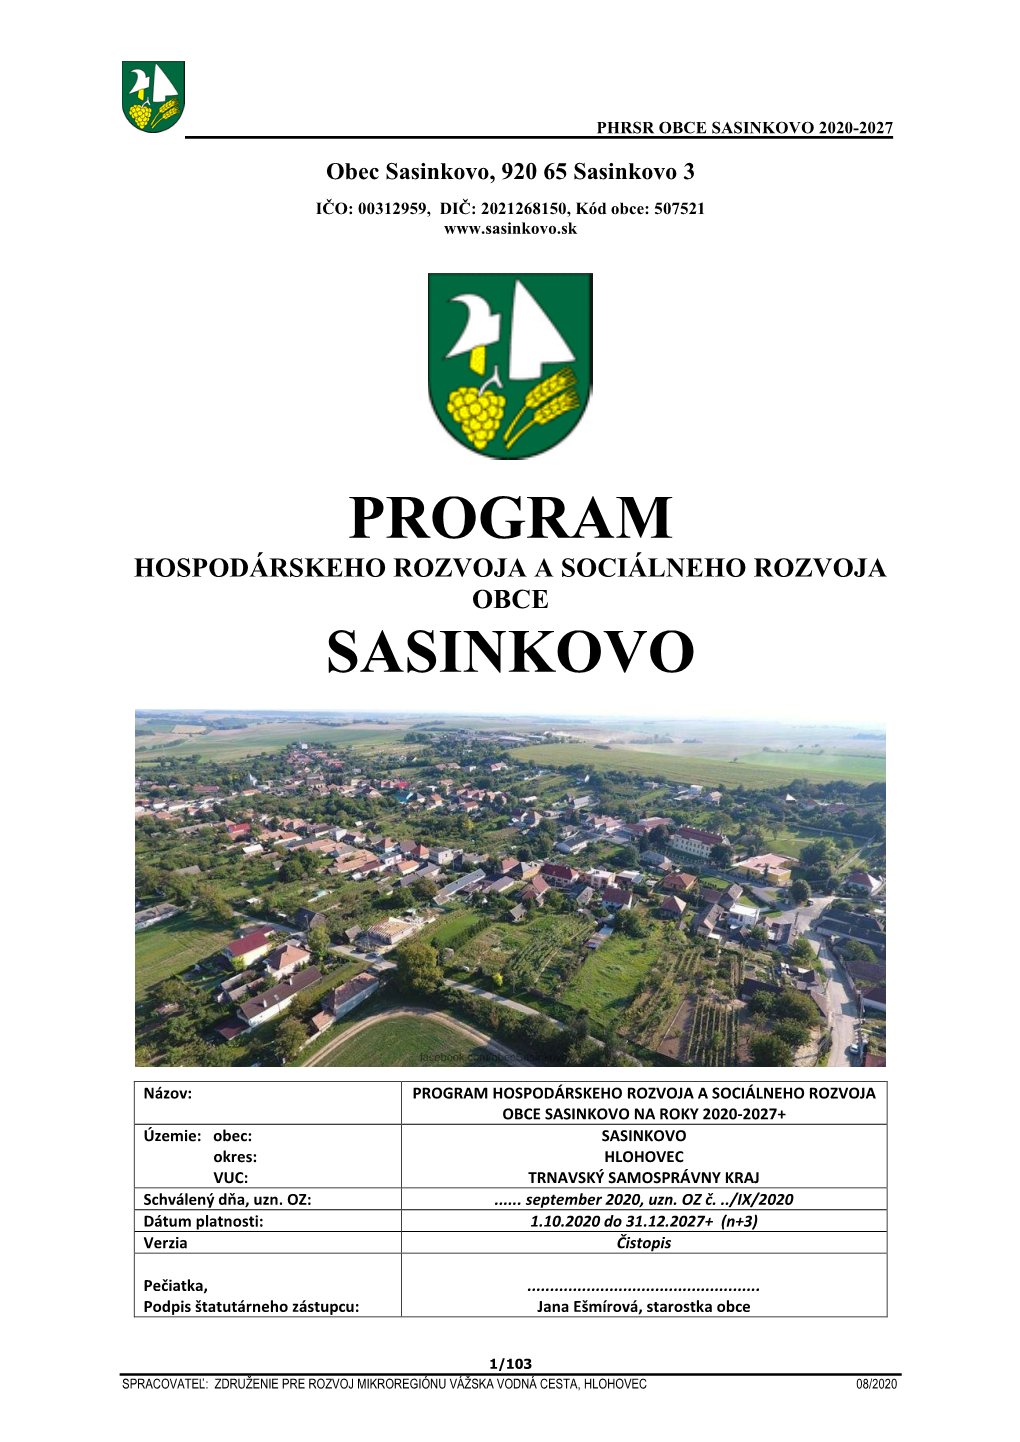 Program Sasinkovo